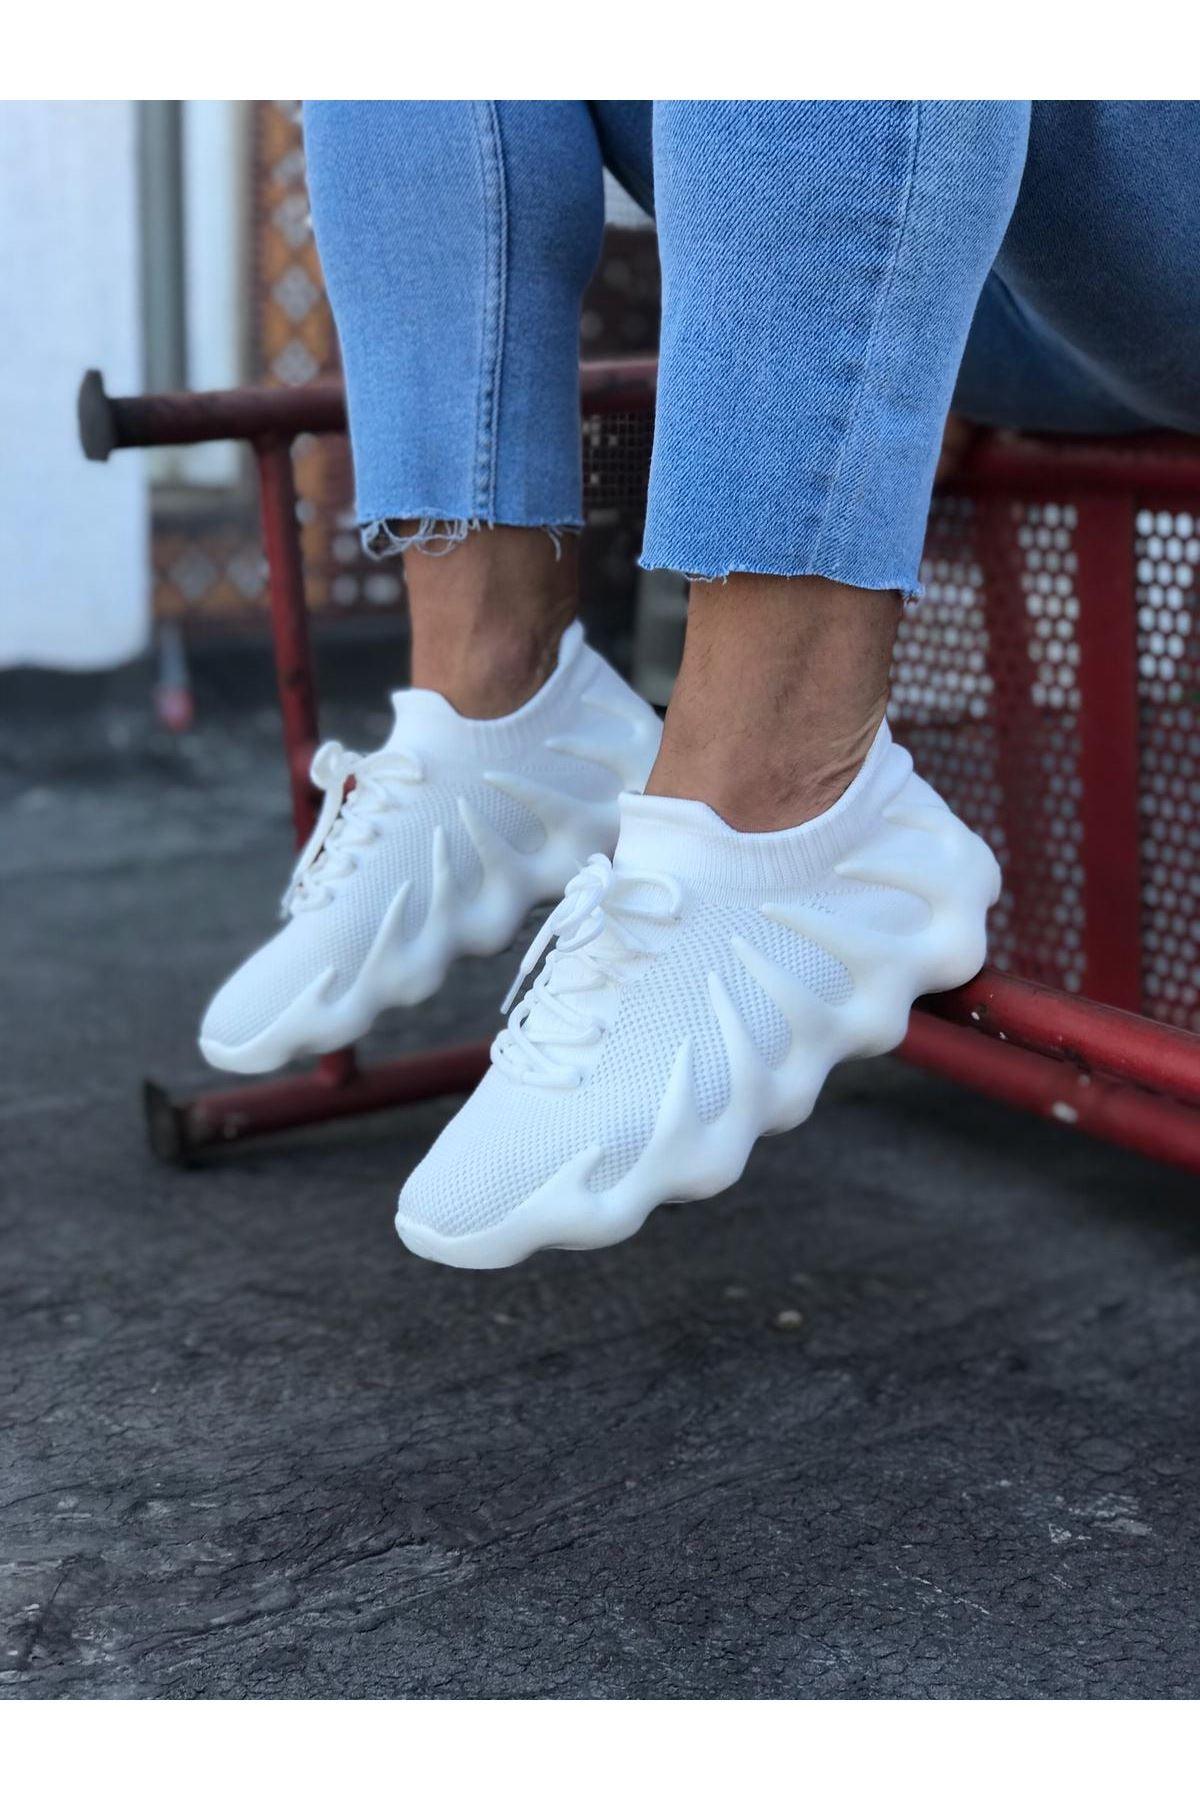 WG300 White Knitwear Wrap Sole Casual Mens Shoes Sneakers - STREET MODE ™